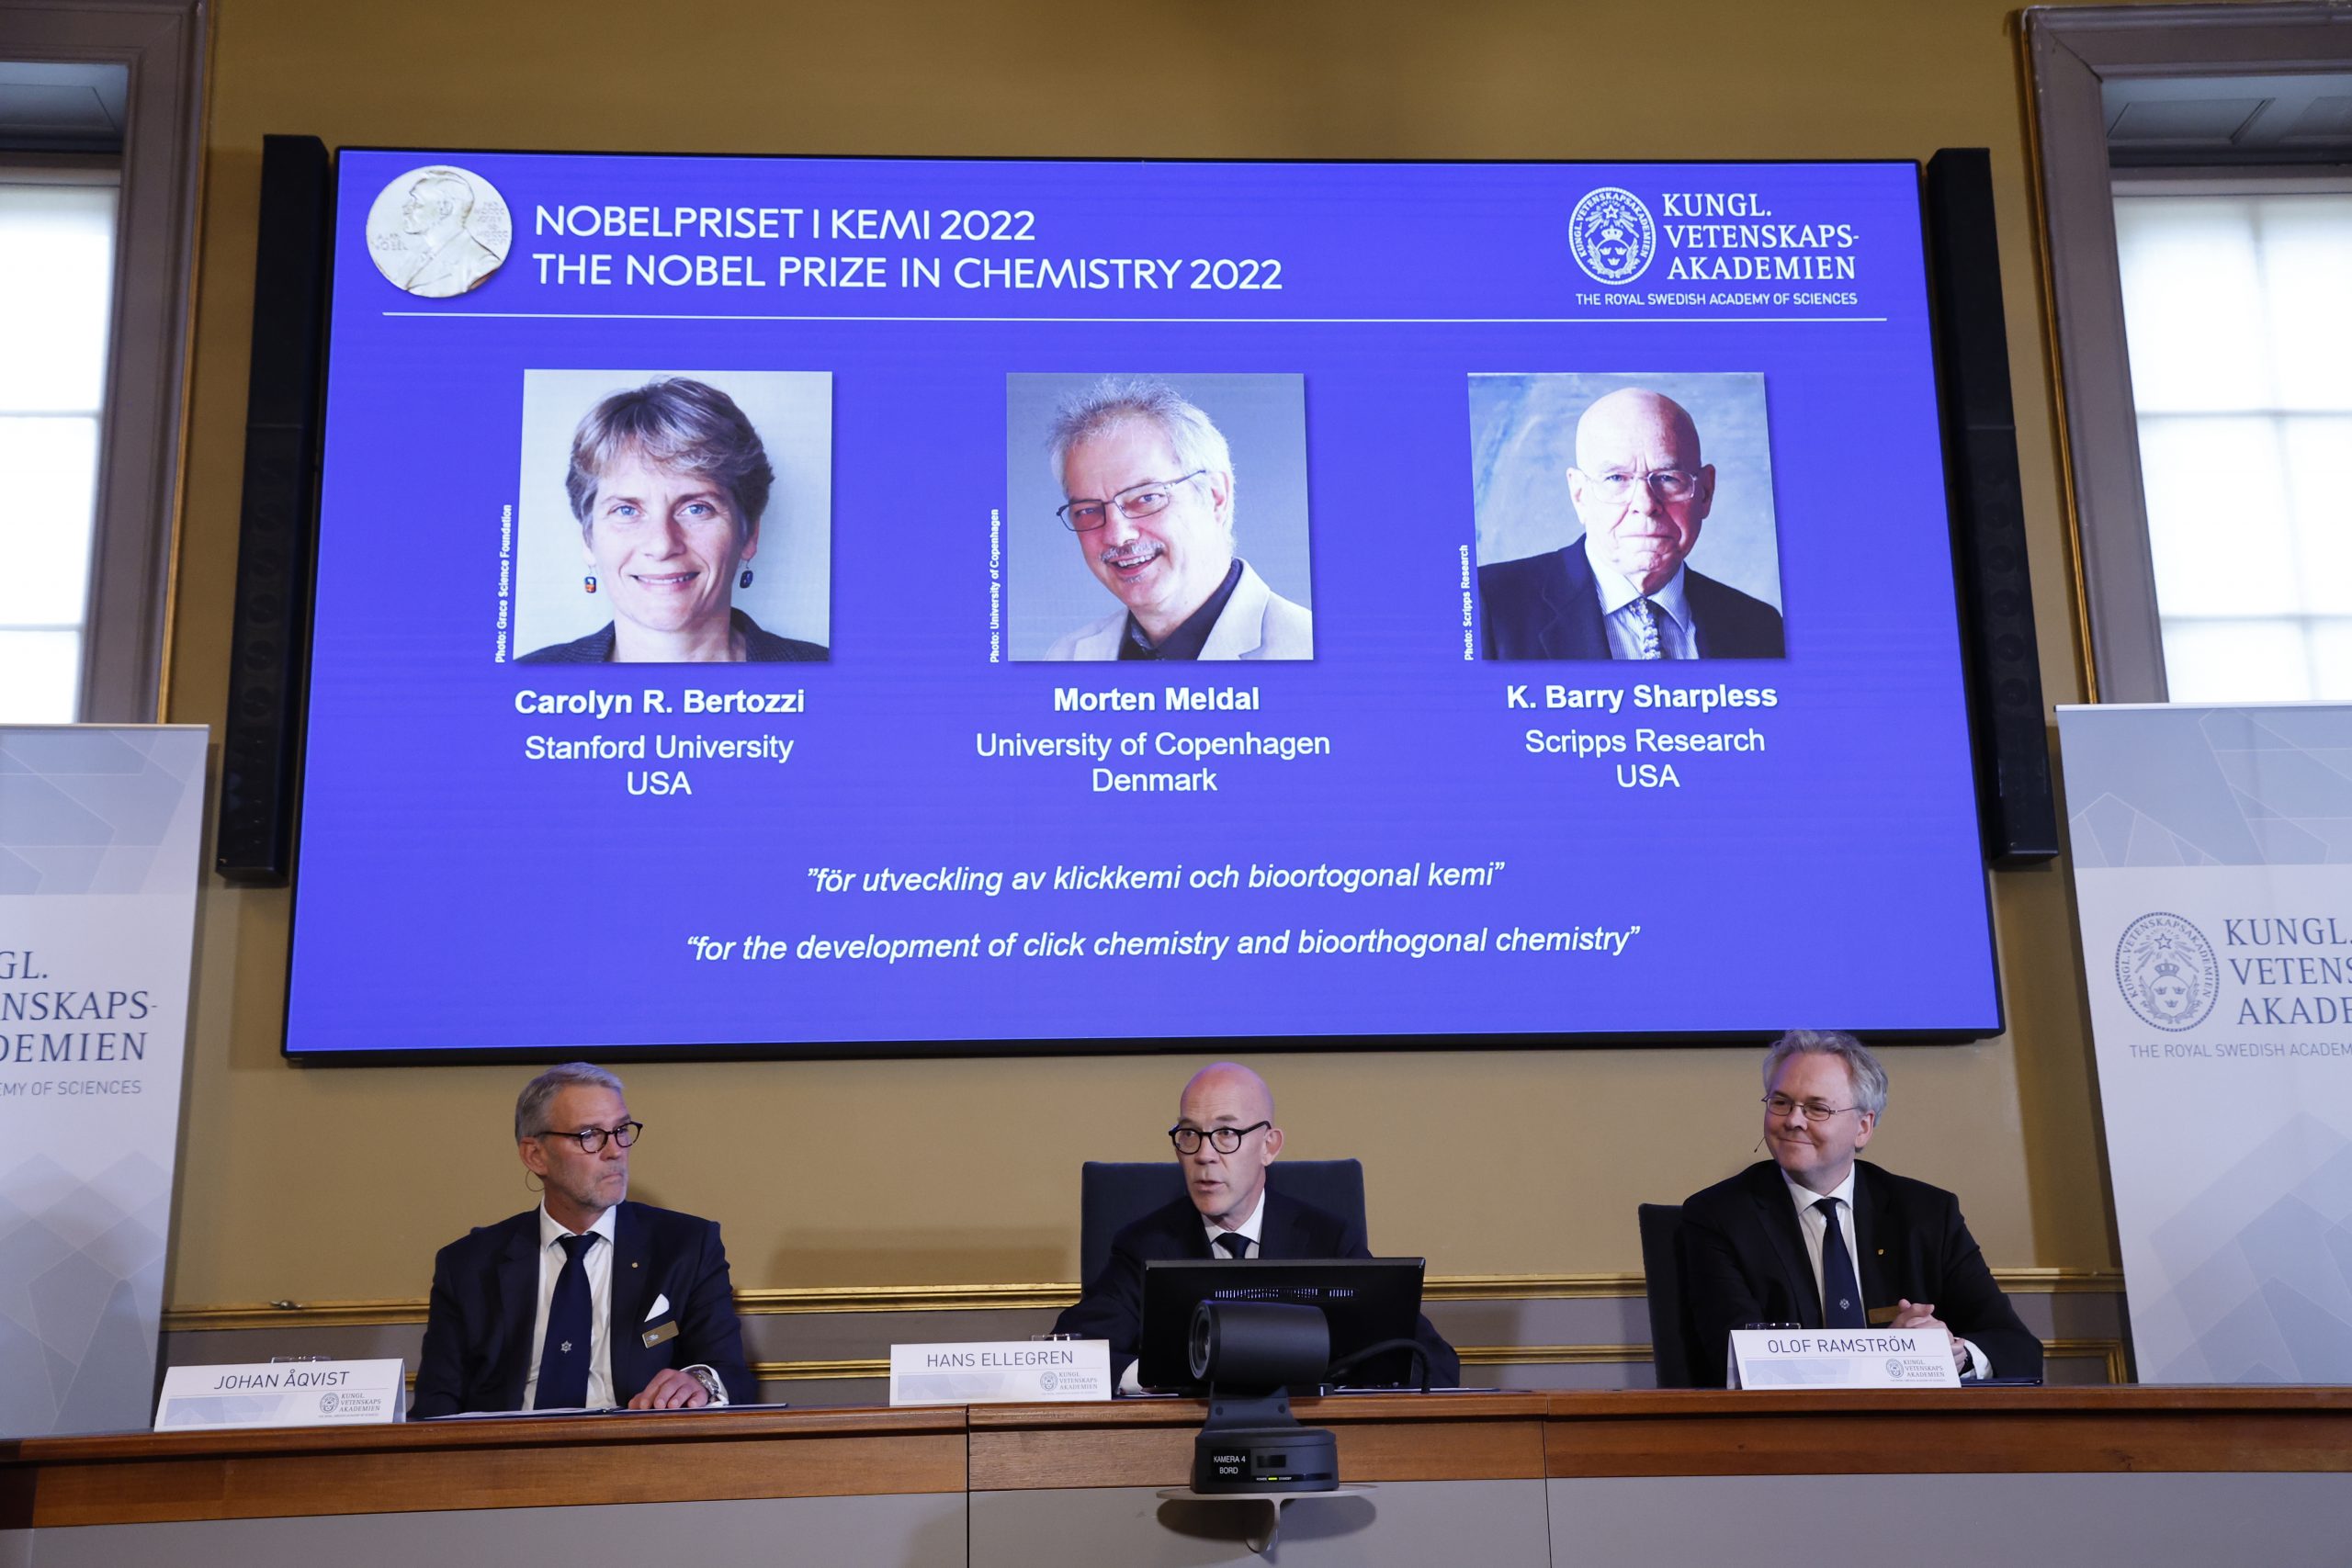 2022 nobel prize in chemistry winners revealed IHA News